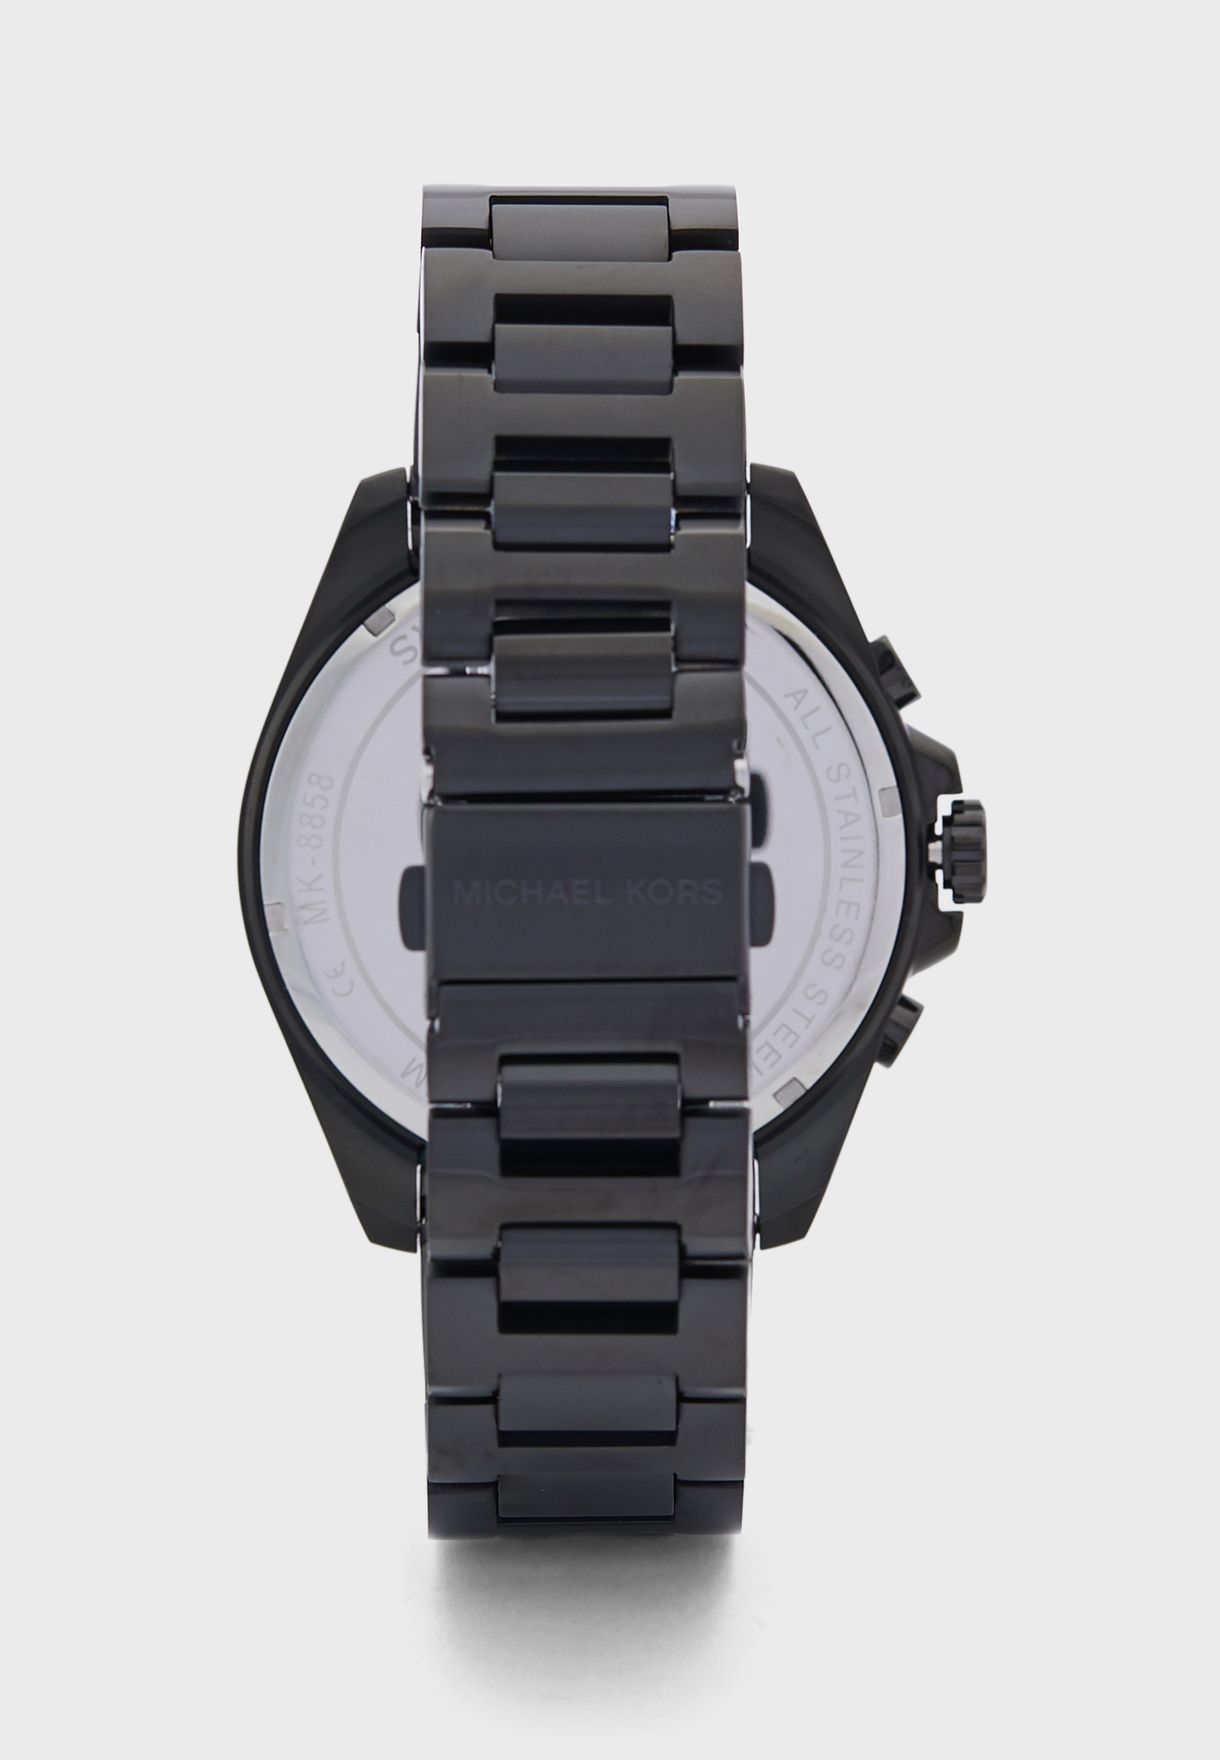 MK8858 Analog Watch